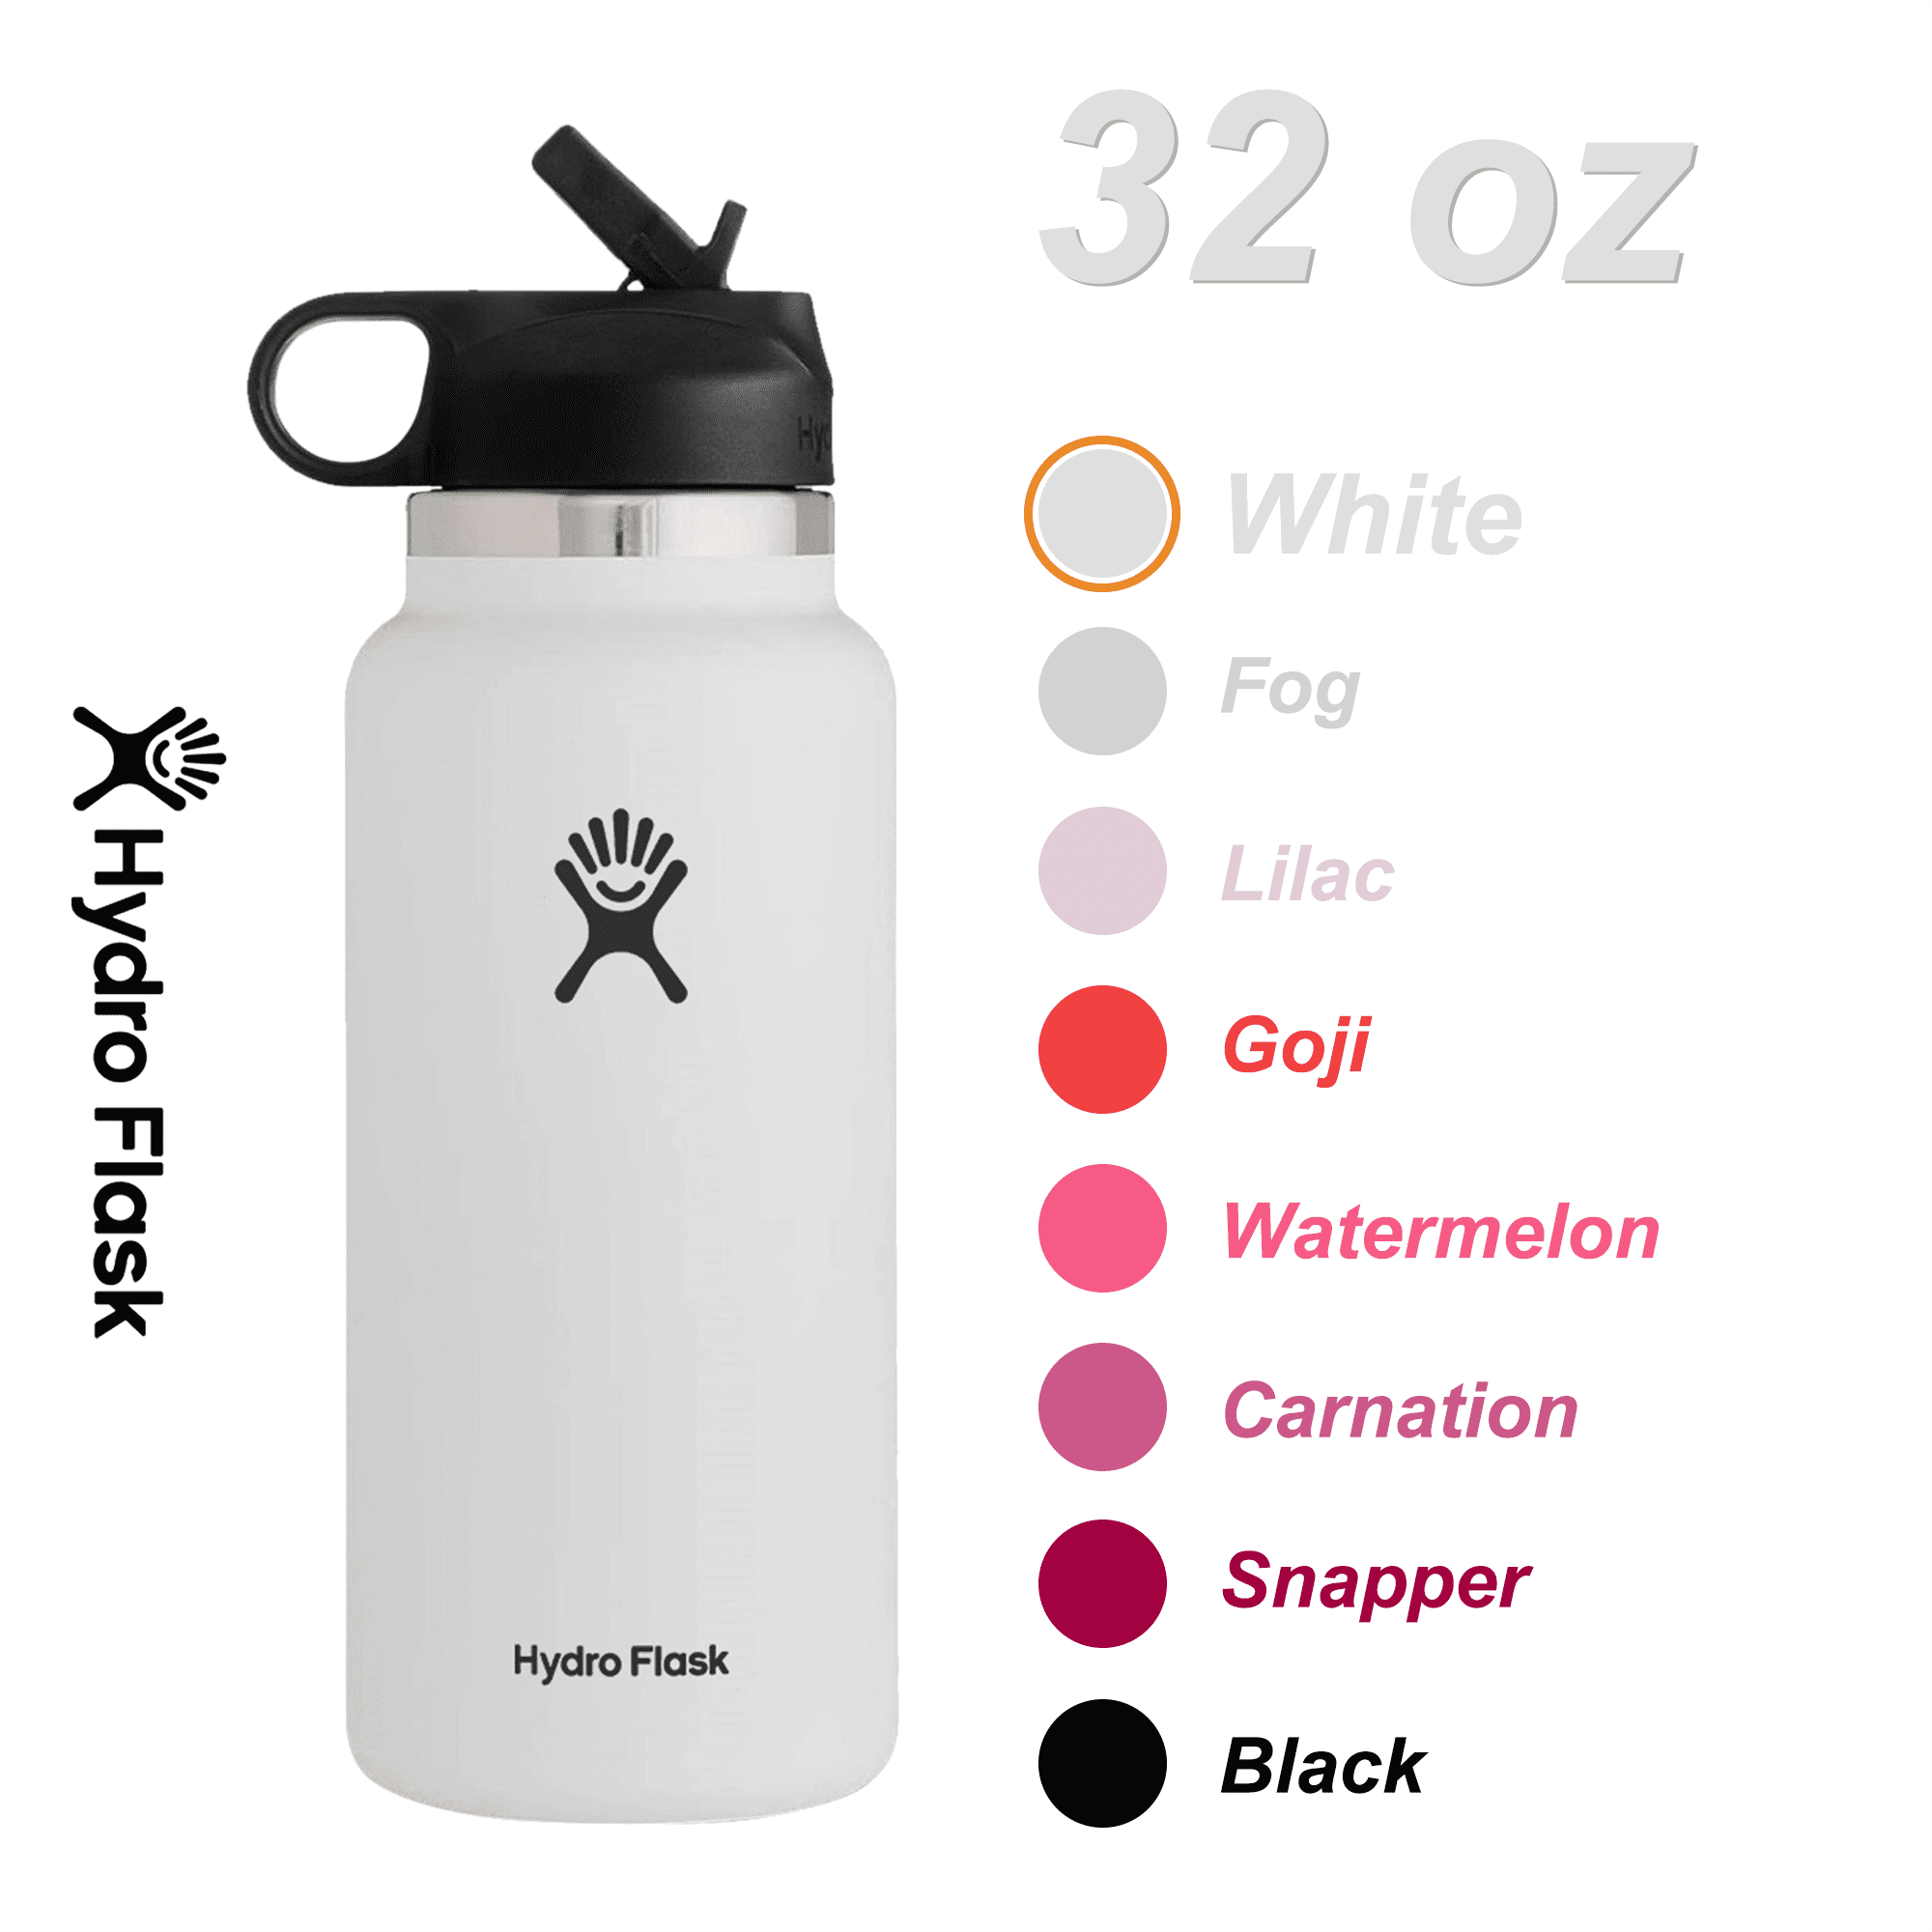 Hydro Flask Unisex 12 Oz Wide Flex White 2.0